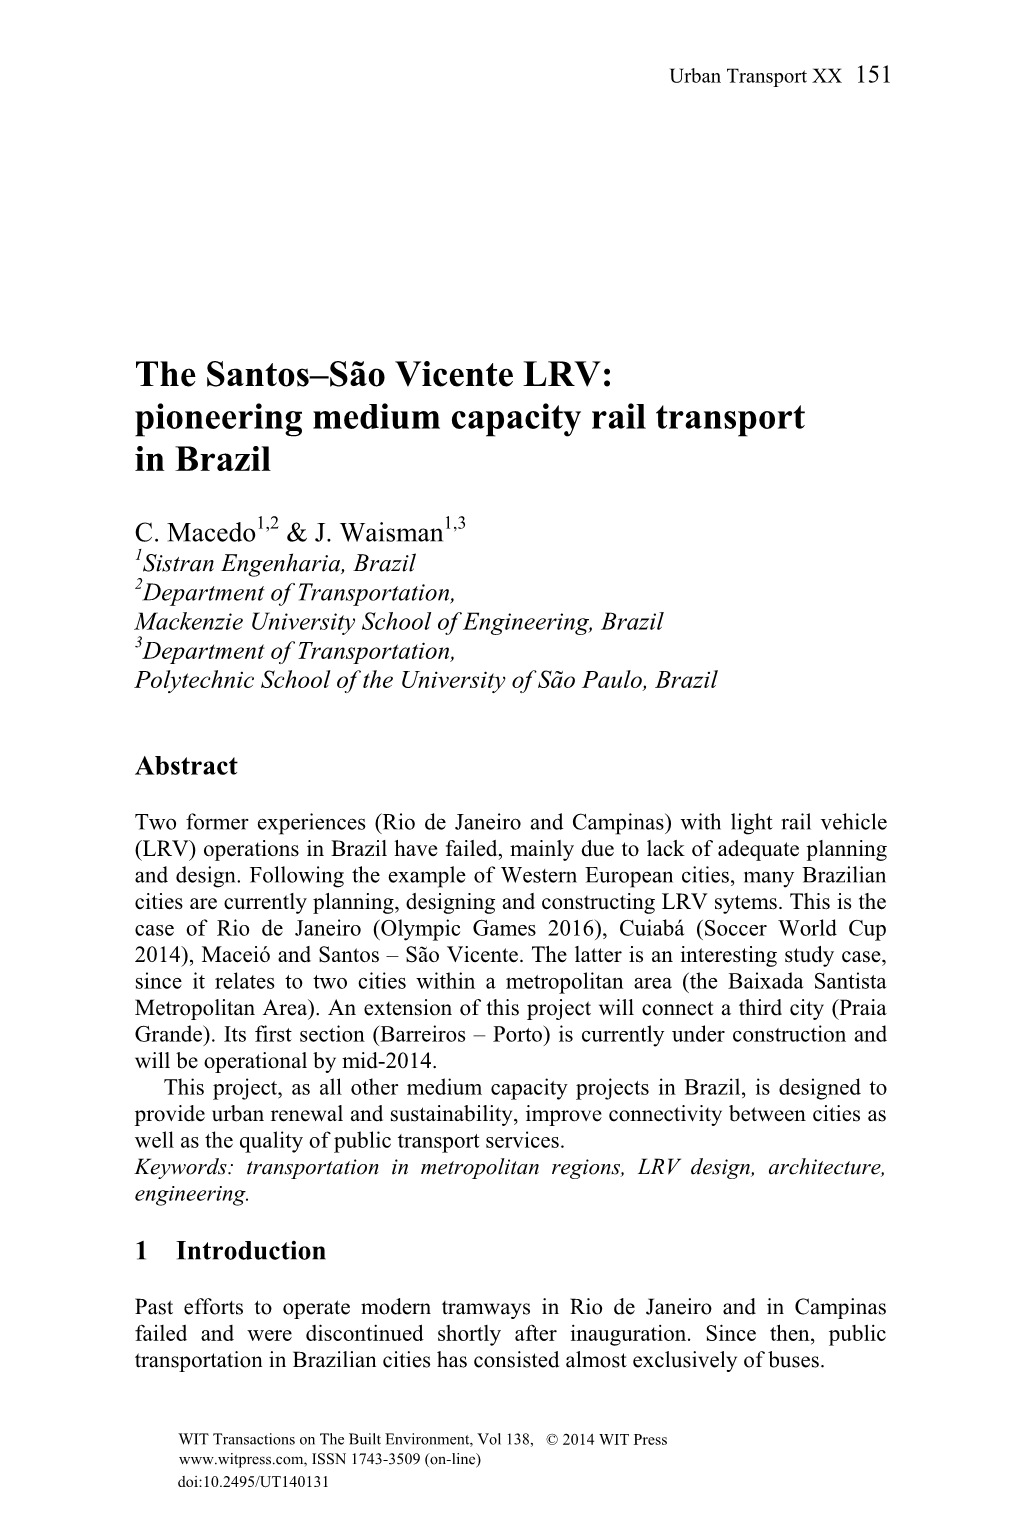 The Santos–São Vicente LRV: Pioneering Medium Capacity Rail Transport in Brazil